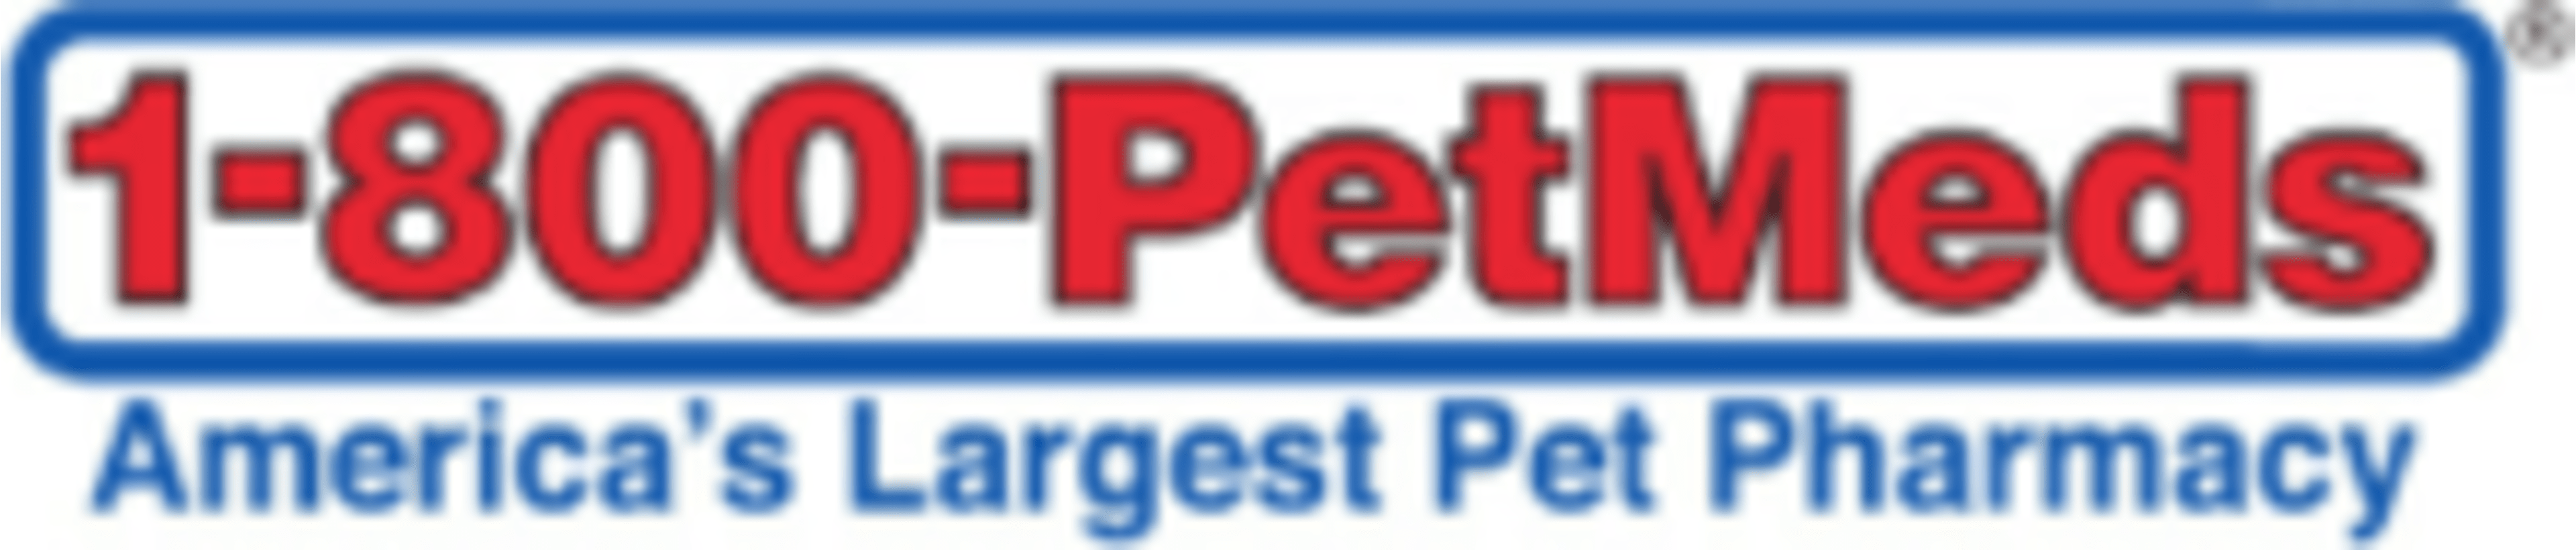 1-800-PetMedsCode